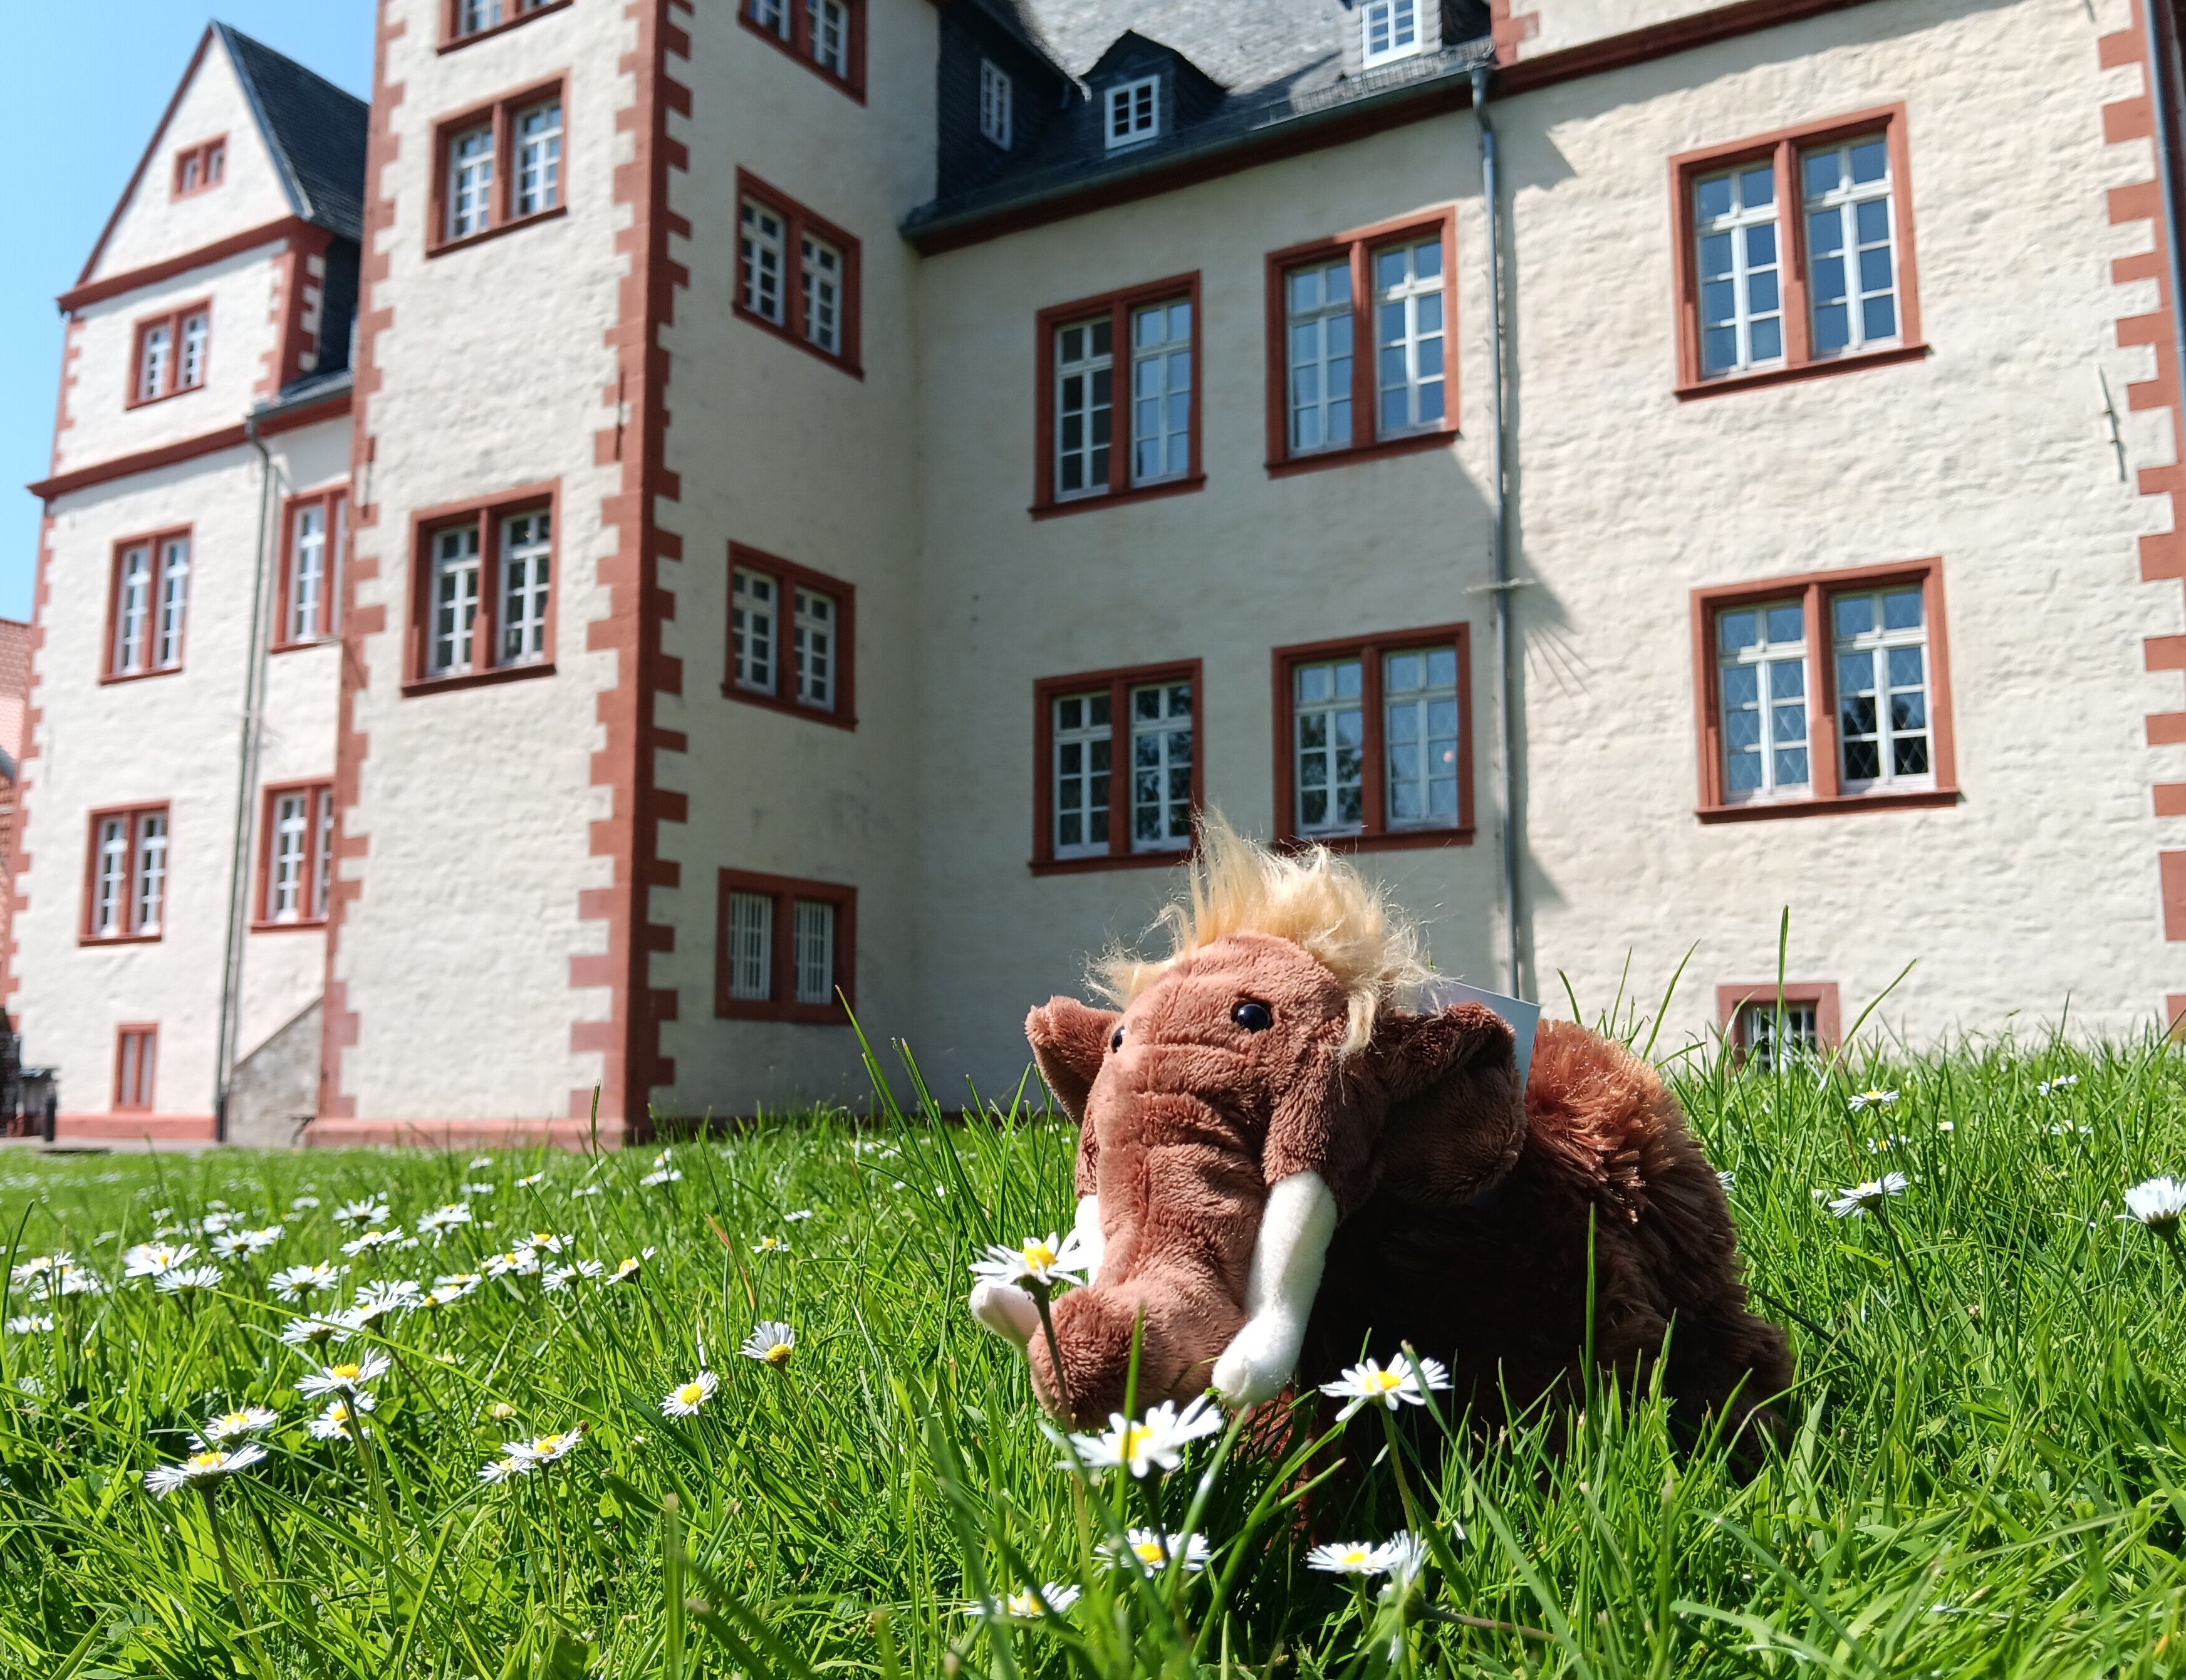 Das Bild zeigt das Pl&uuml;sch-Mammut im Gras vor dem Schloss Salder, das man bei der Schnitzeljagd gewinnen kann.